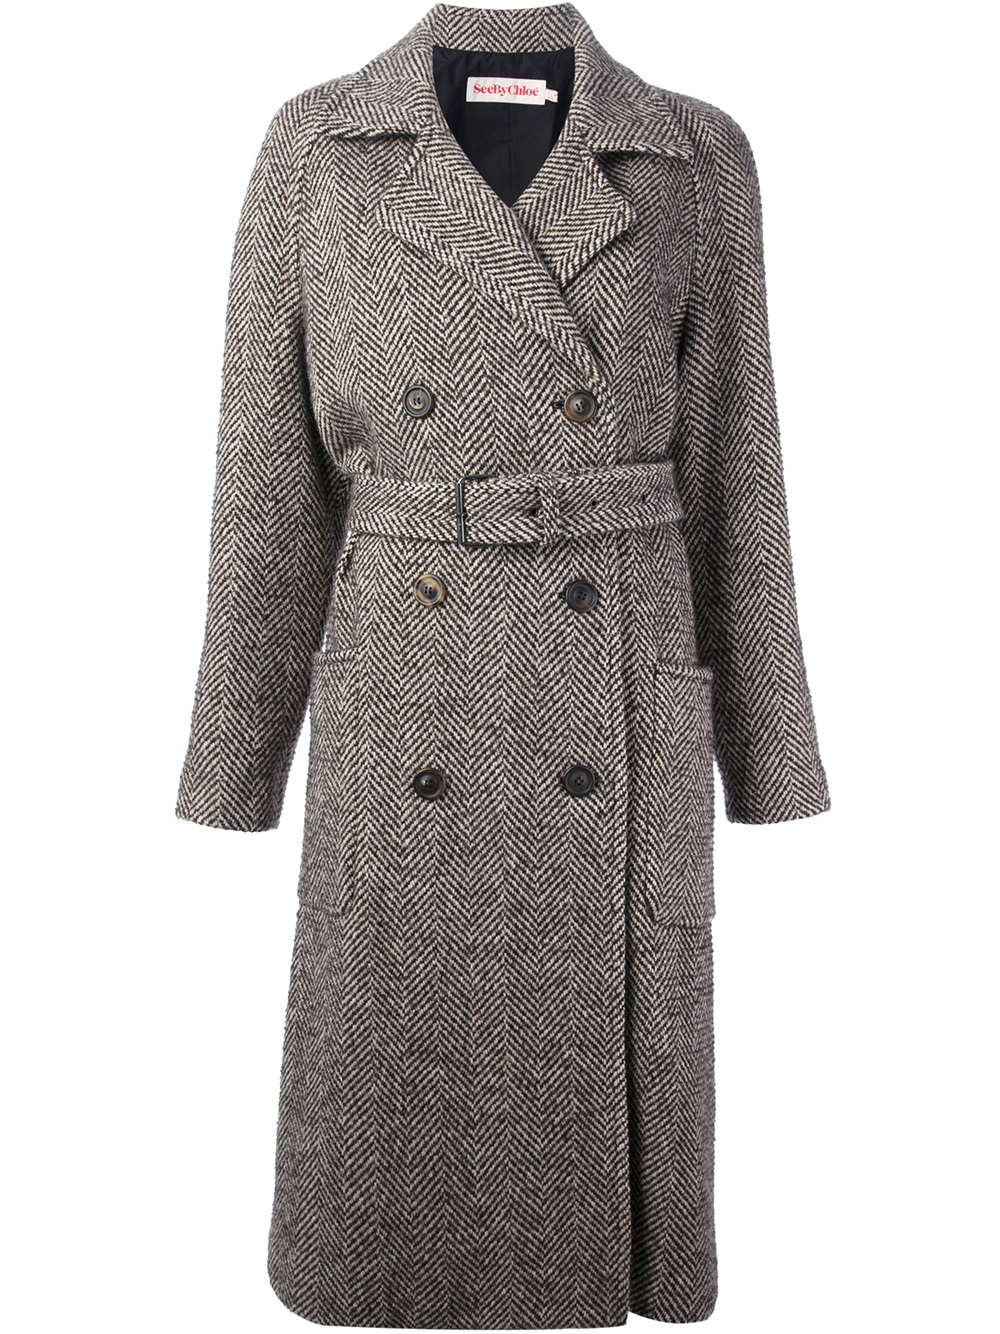 See by chloé Coat in Brown | Lyst